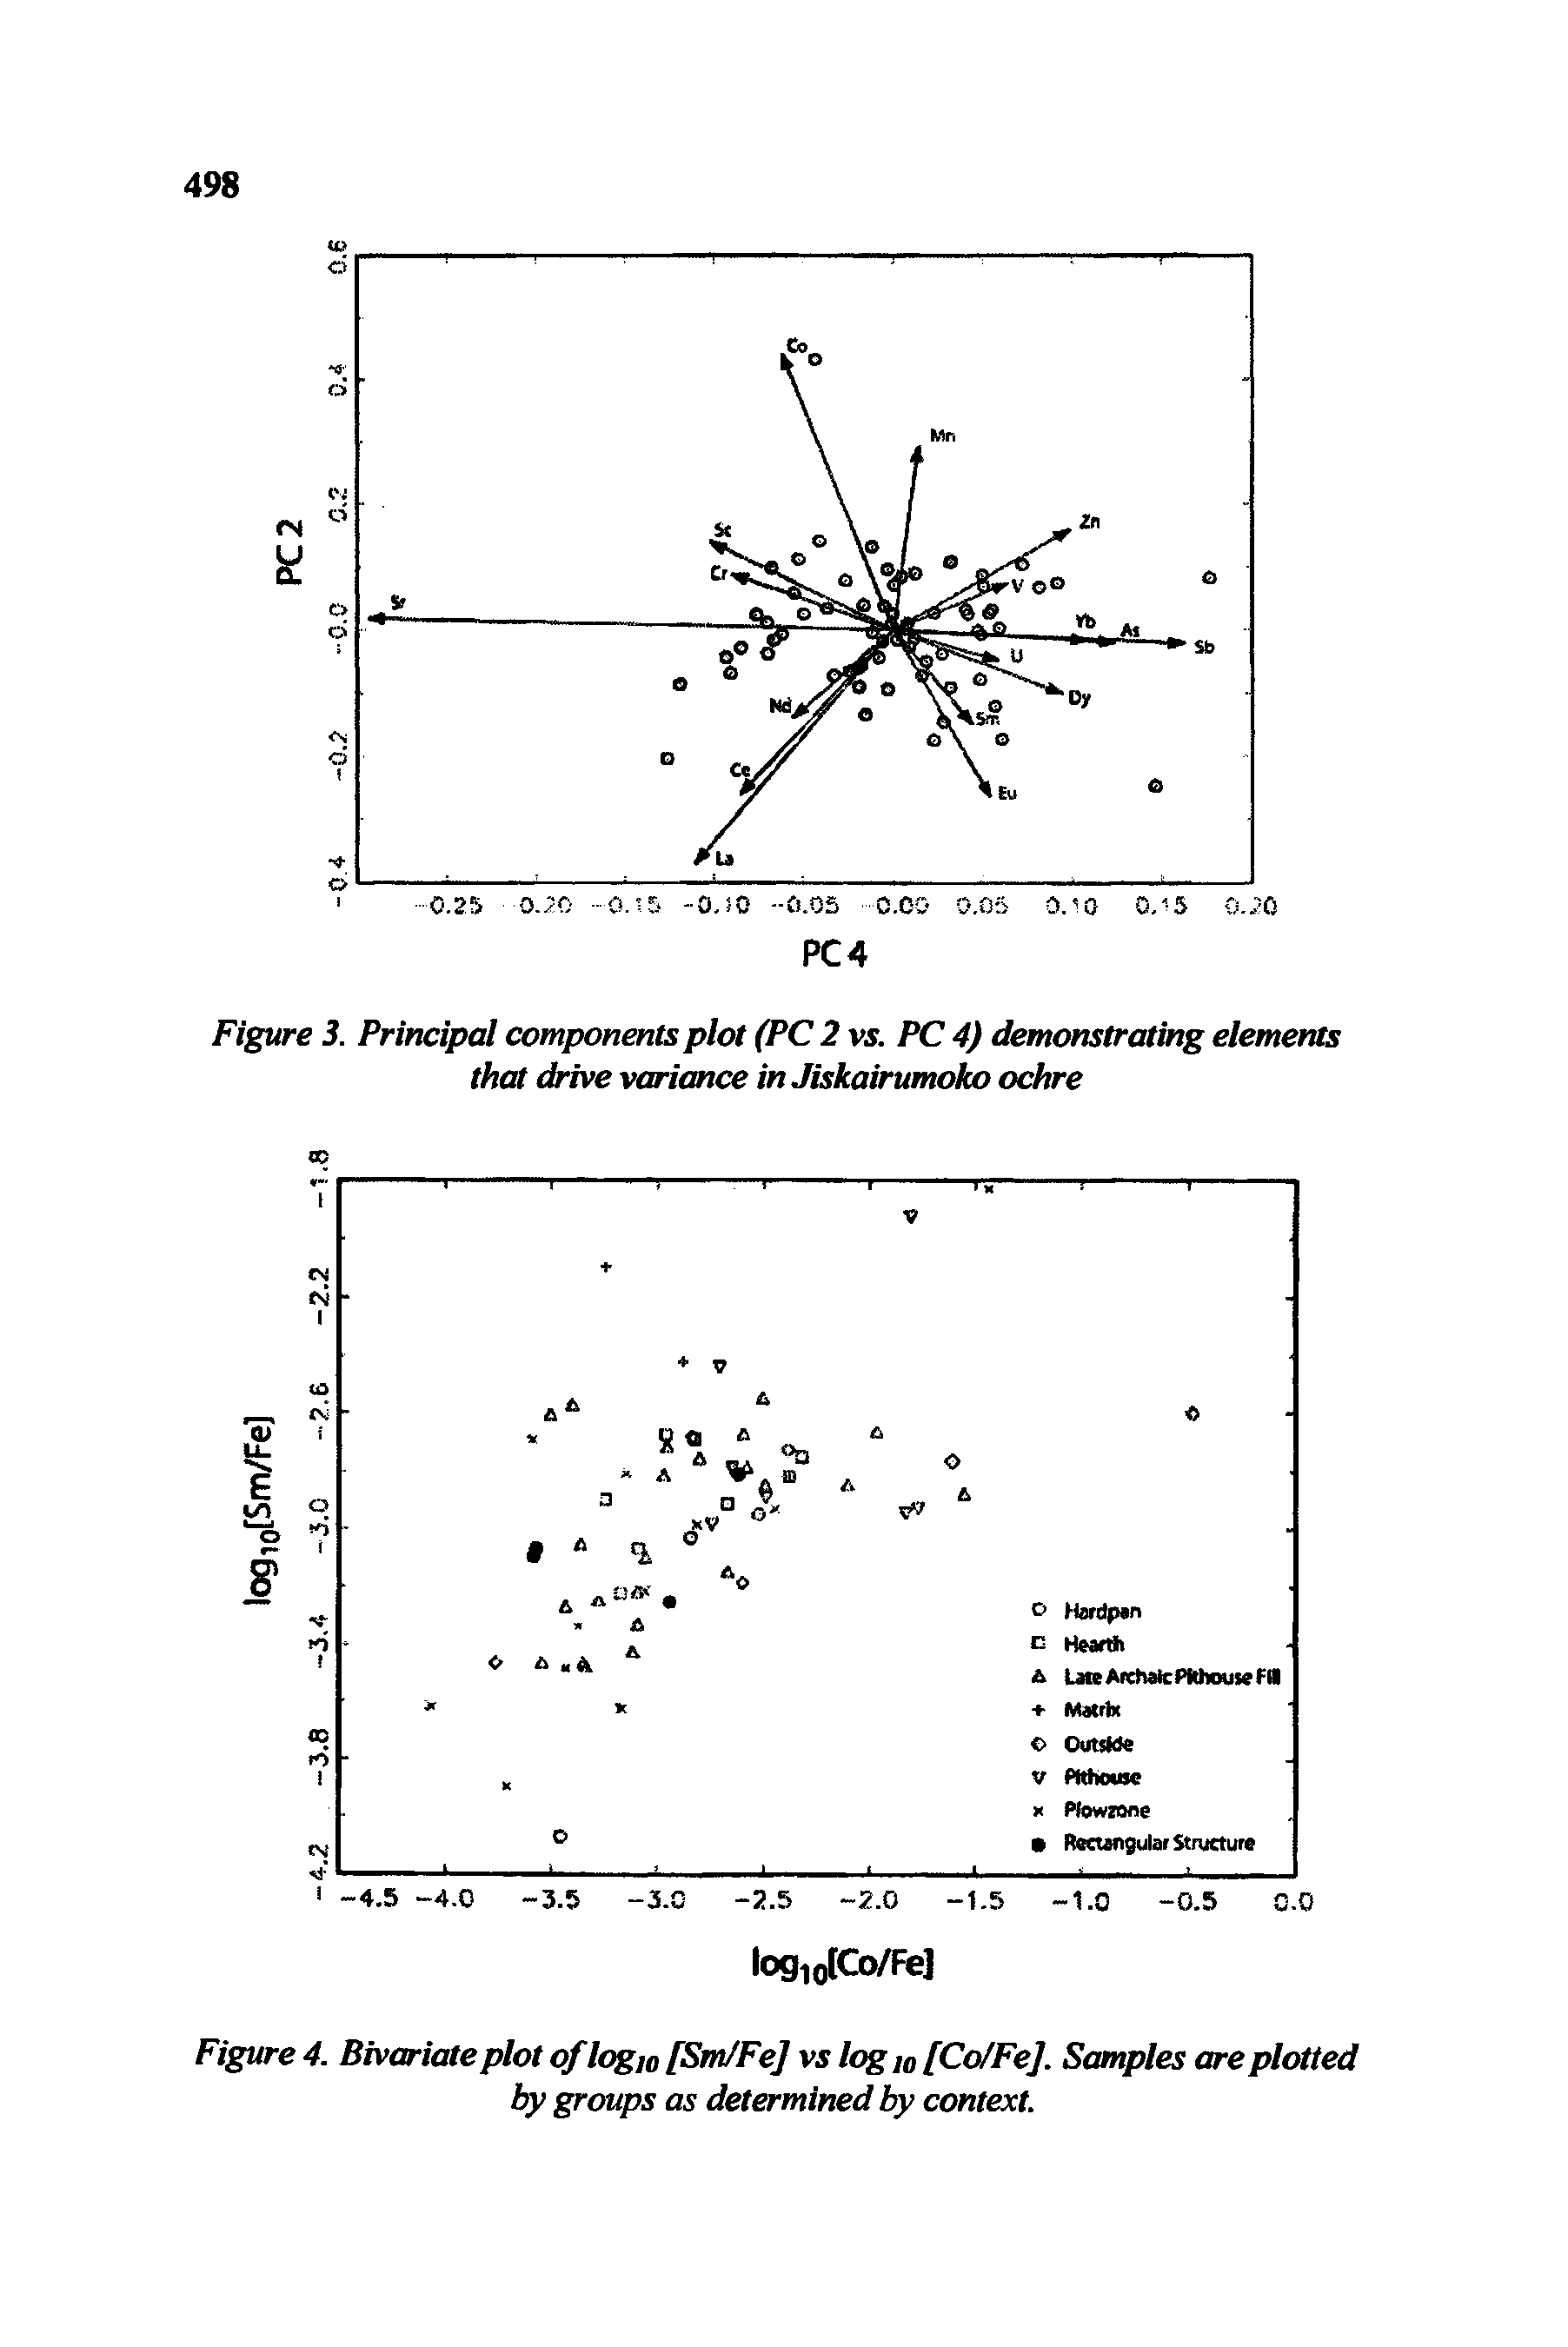 Figure 3. Principal components plot (PC 2 vs. PC 4) demonstrating elements that drive variance in Jiskairumoko ochre...